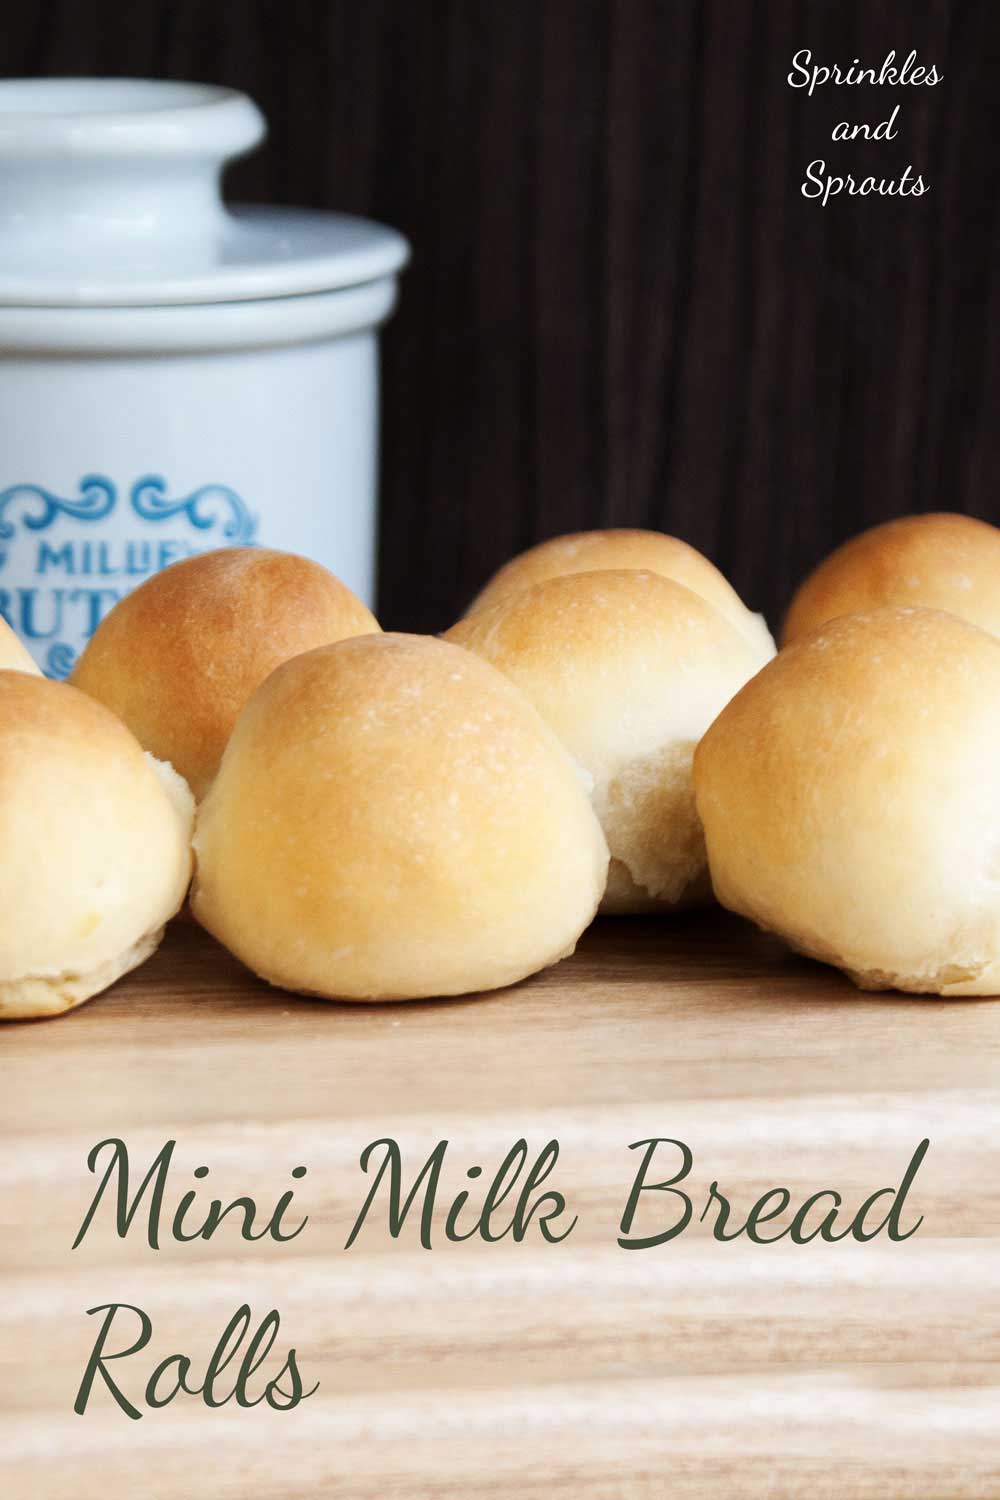 https://www.sprinklesandsprouts.com/wp-content/uploads/2015/05/Mini-Milk-Bread-Rolls7-1.jpg